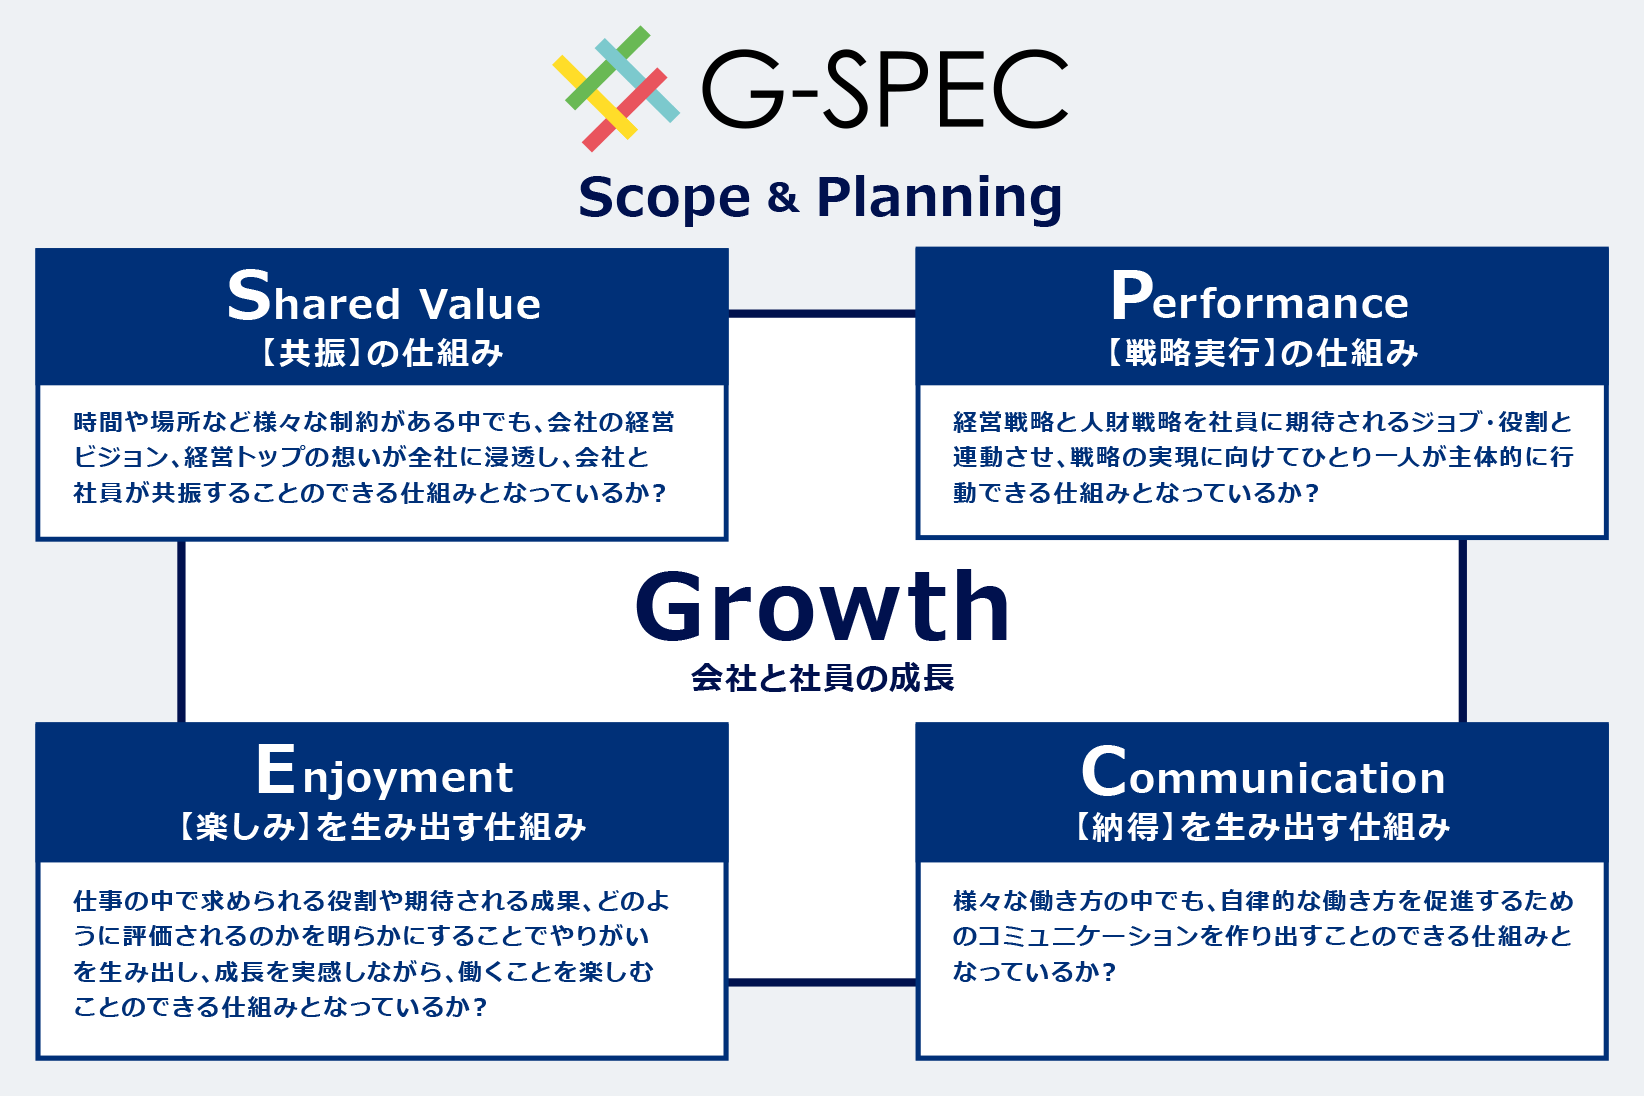 G-SPEC Scope & Planning